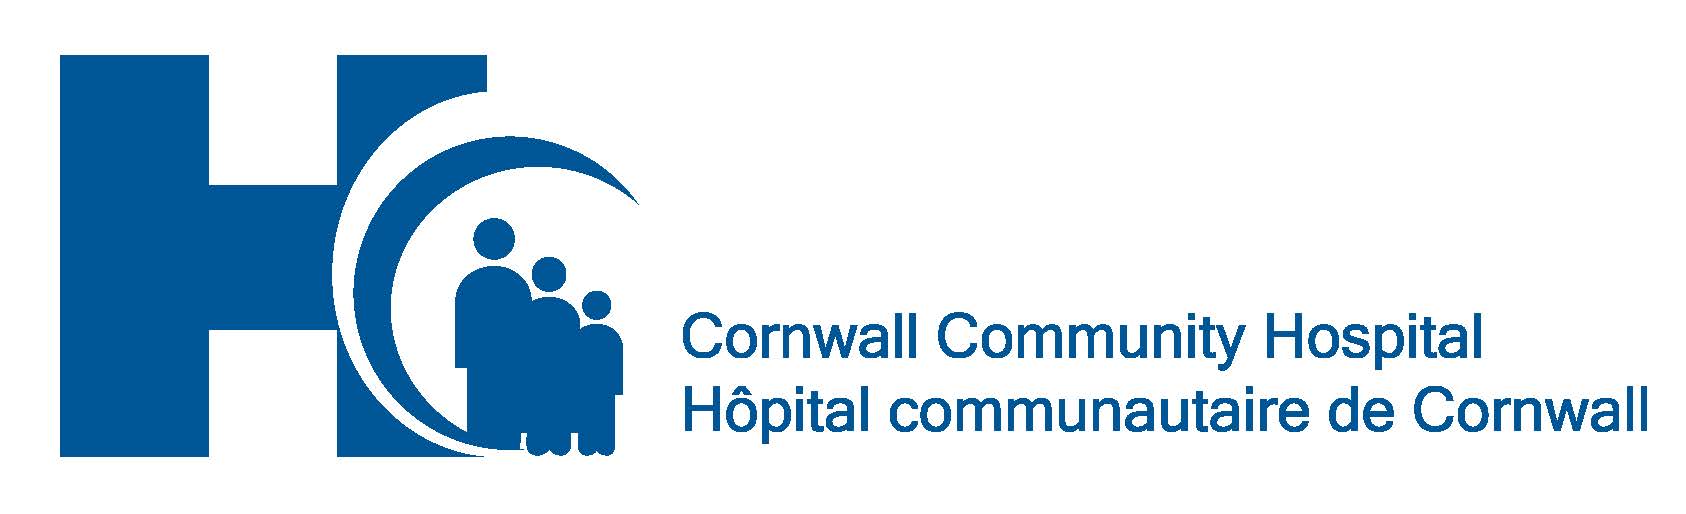 Cornwall-1.jpg